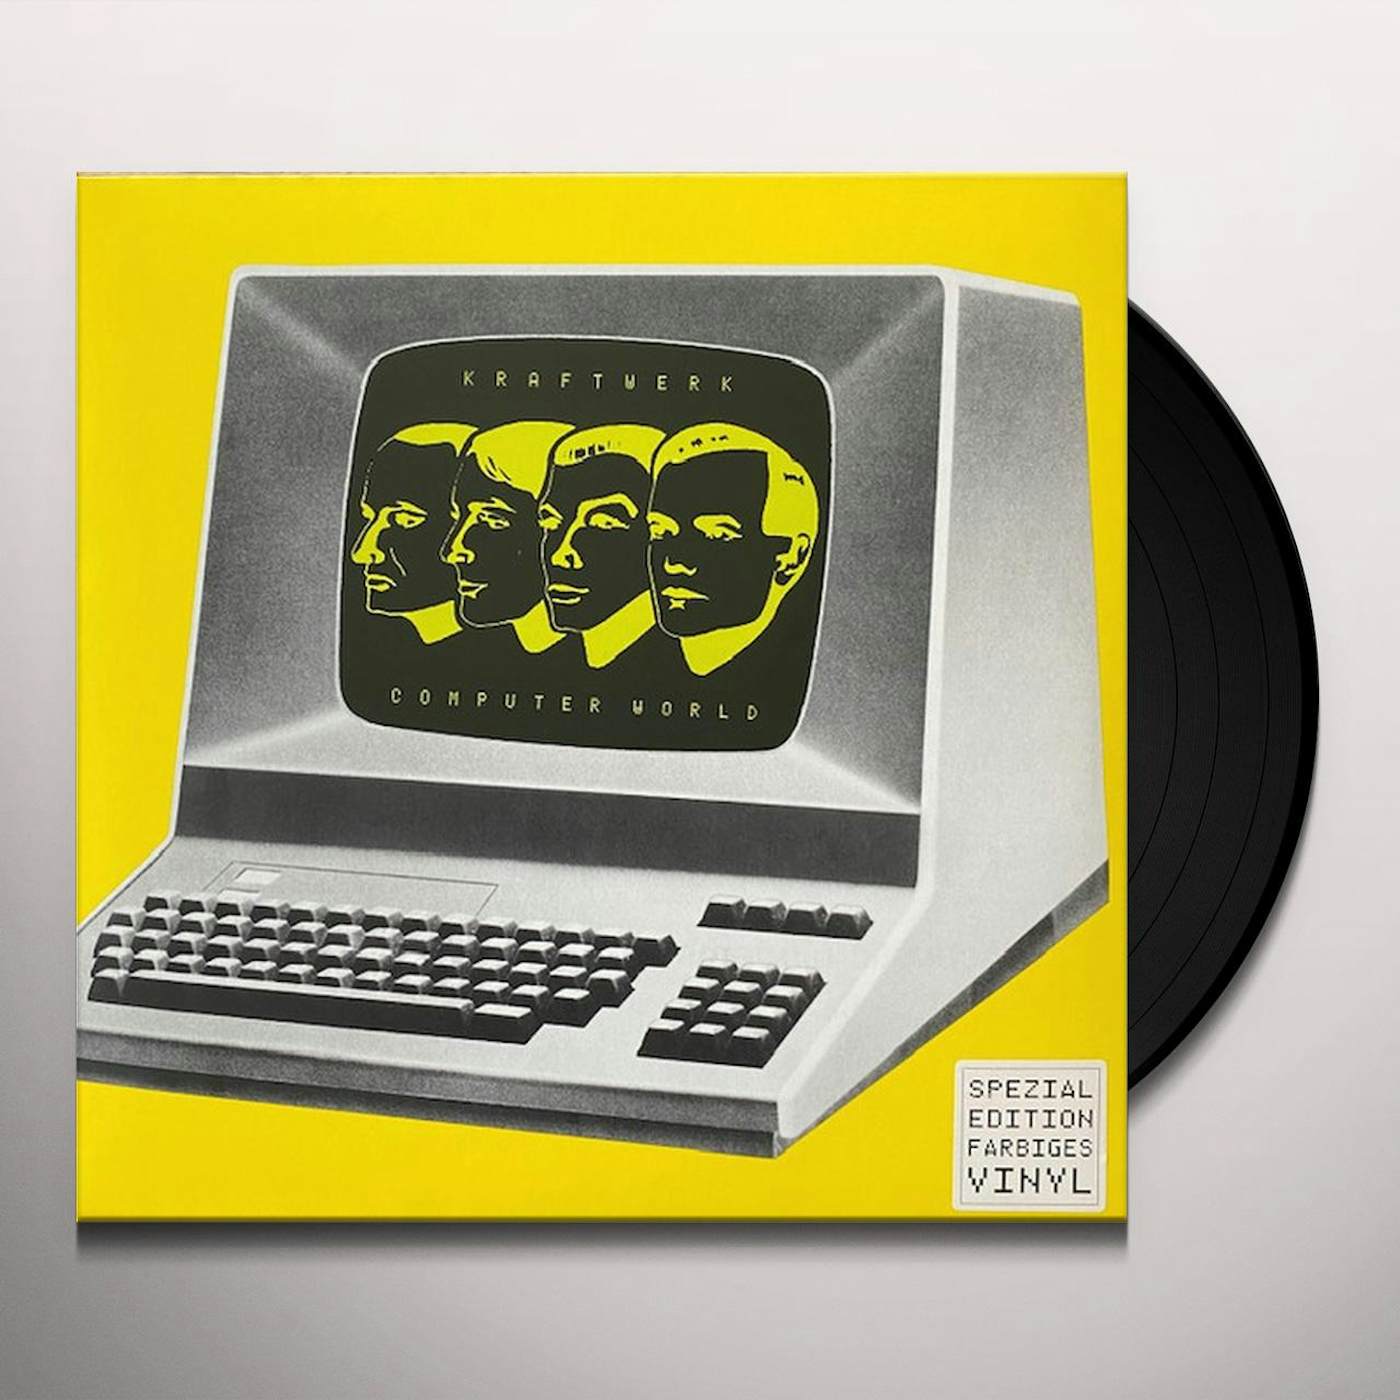 Kraftwerk COMPUTER WORLD Vinyl Record